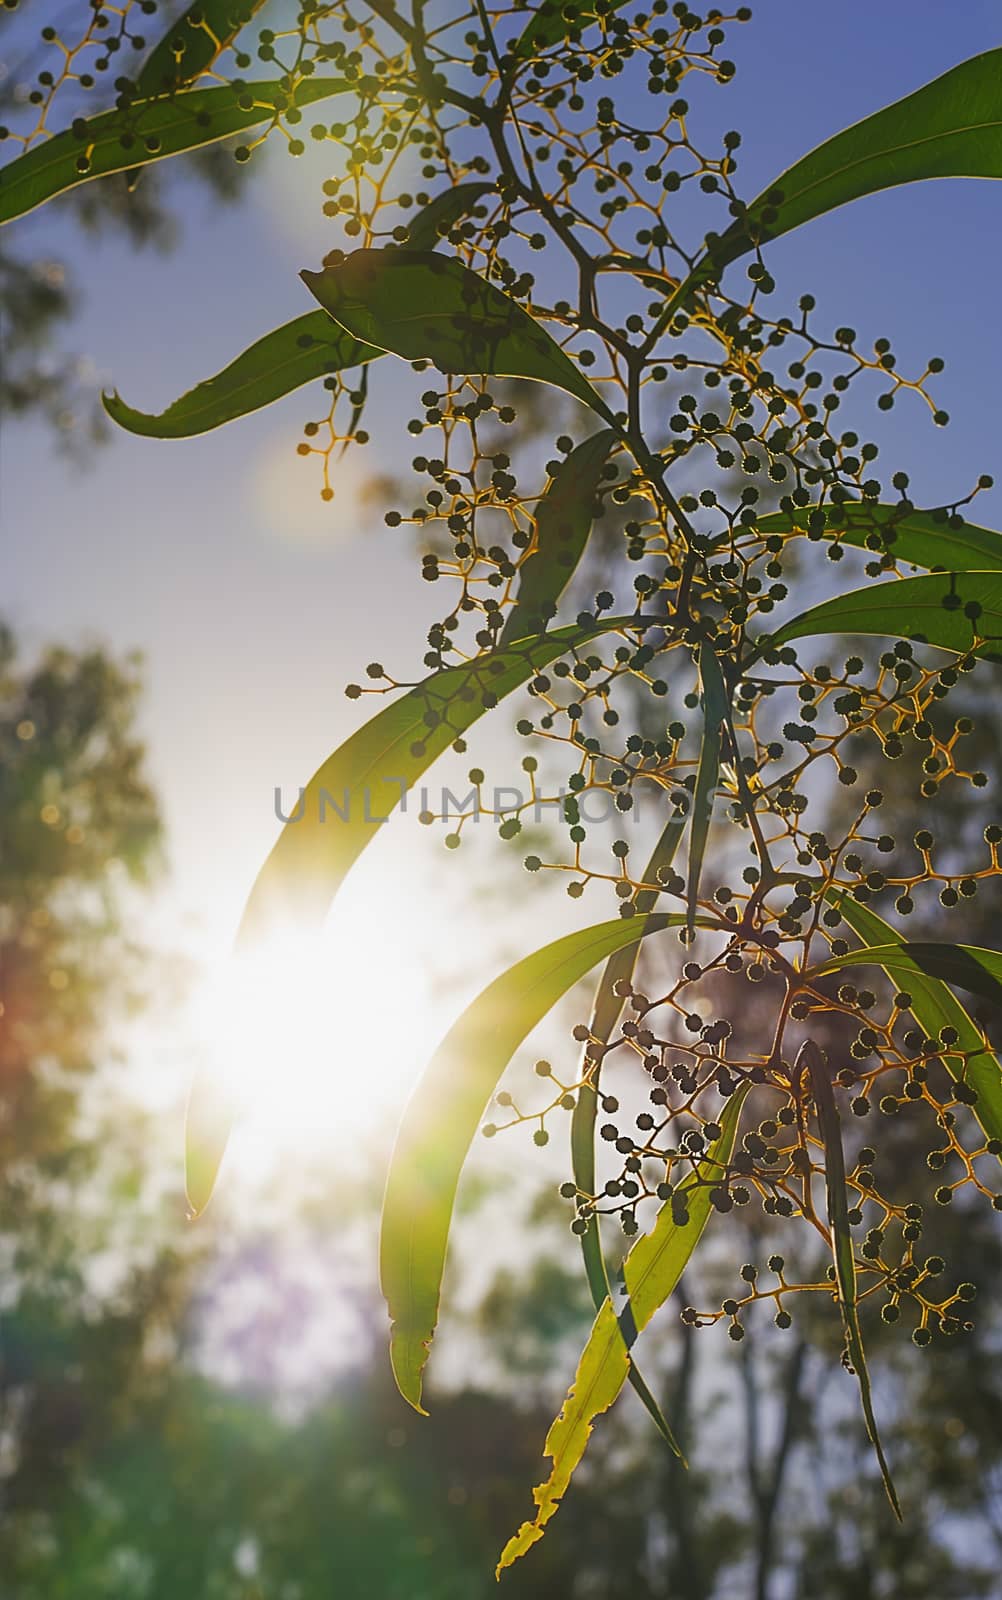 Bright sun rays shining through Australian zigzag wattle branches of  Acacia macradenia in a silhouette bush scene during early morning in winter